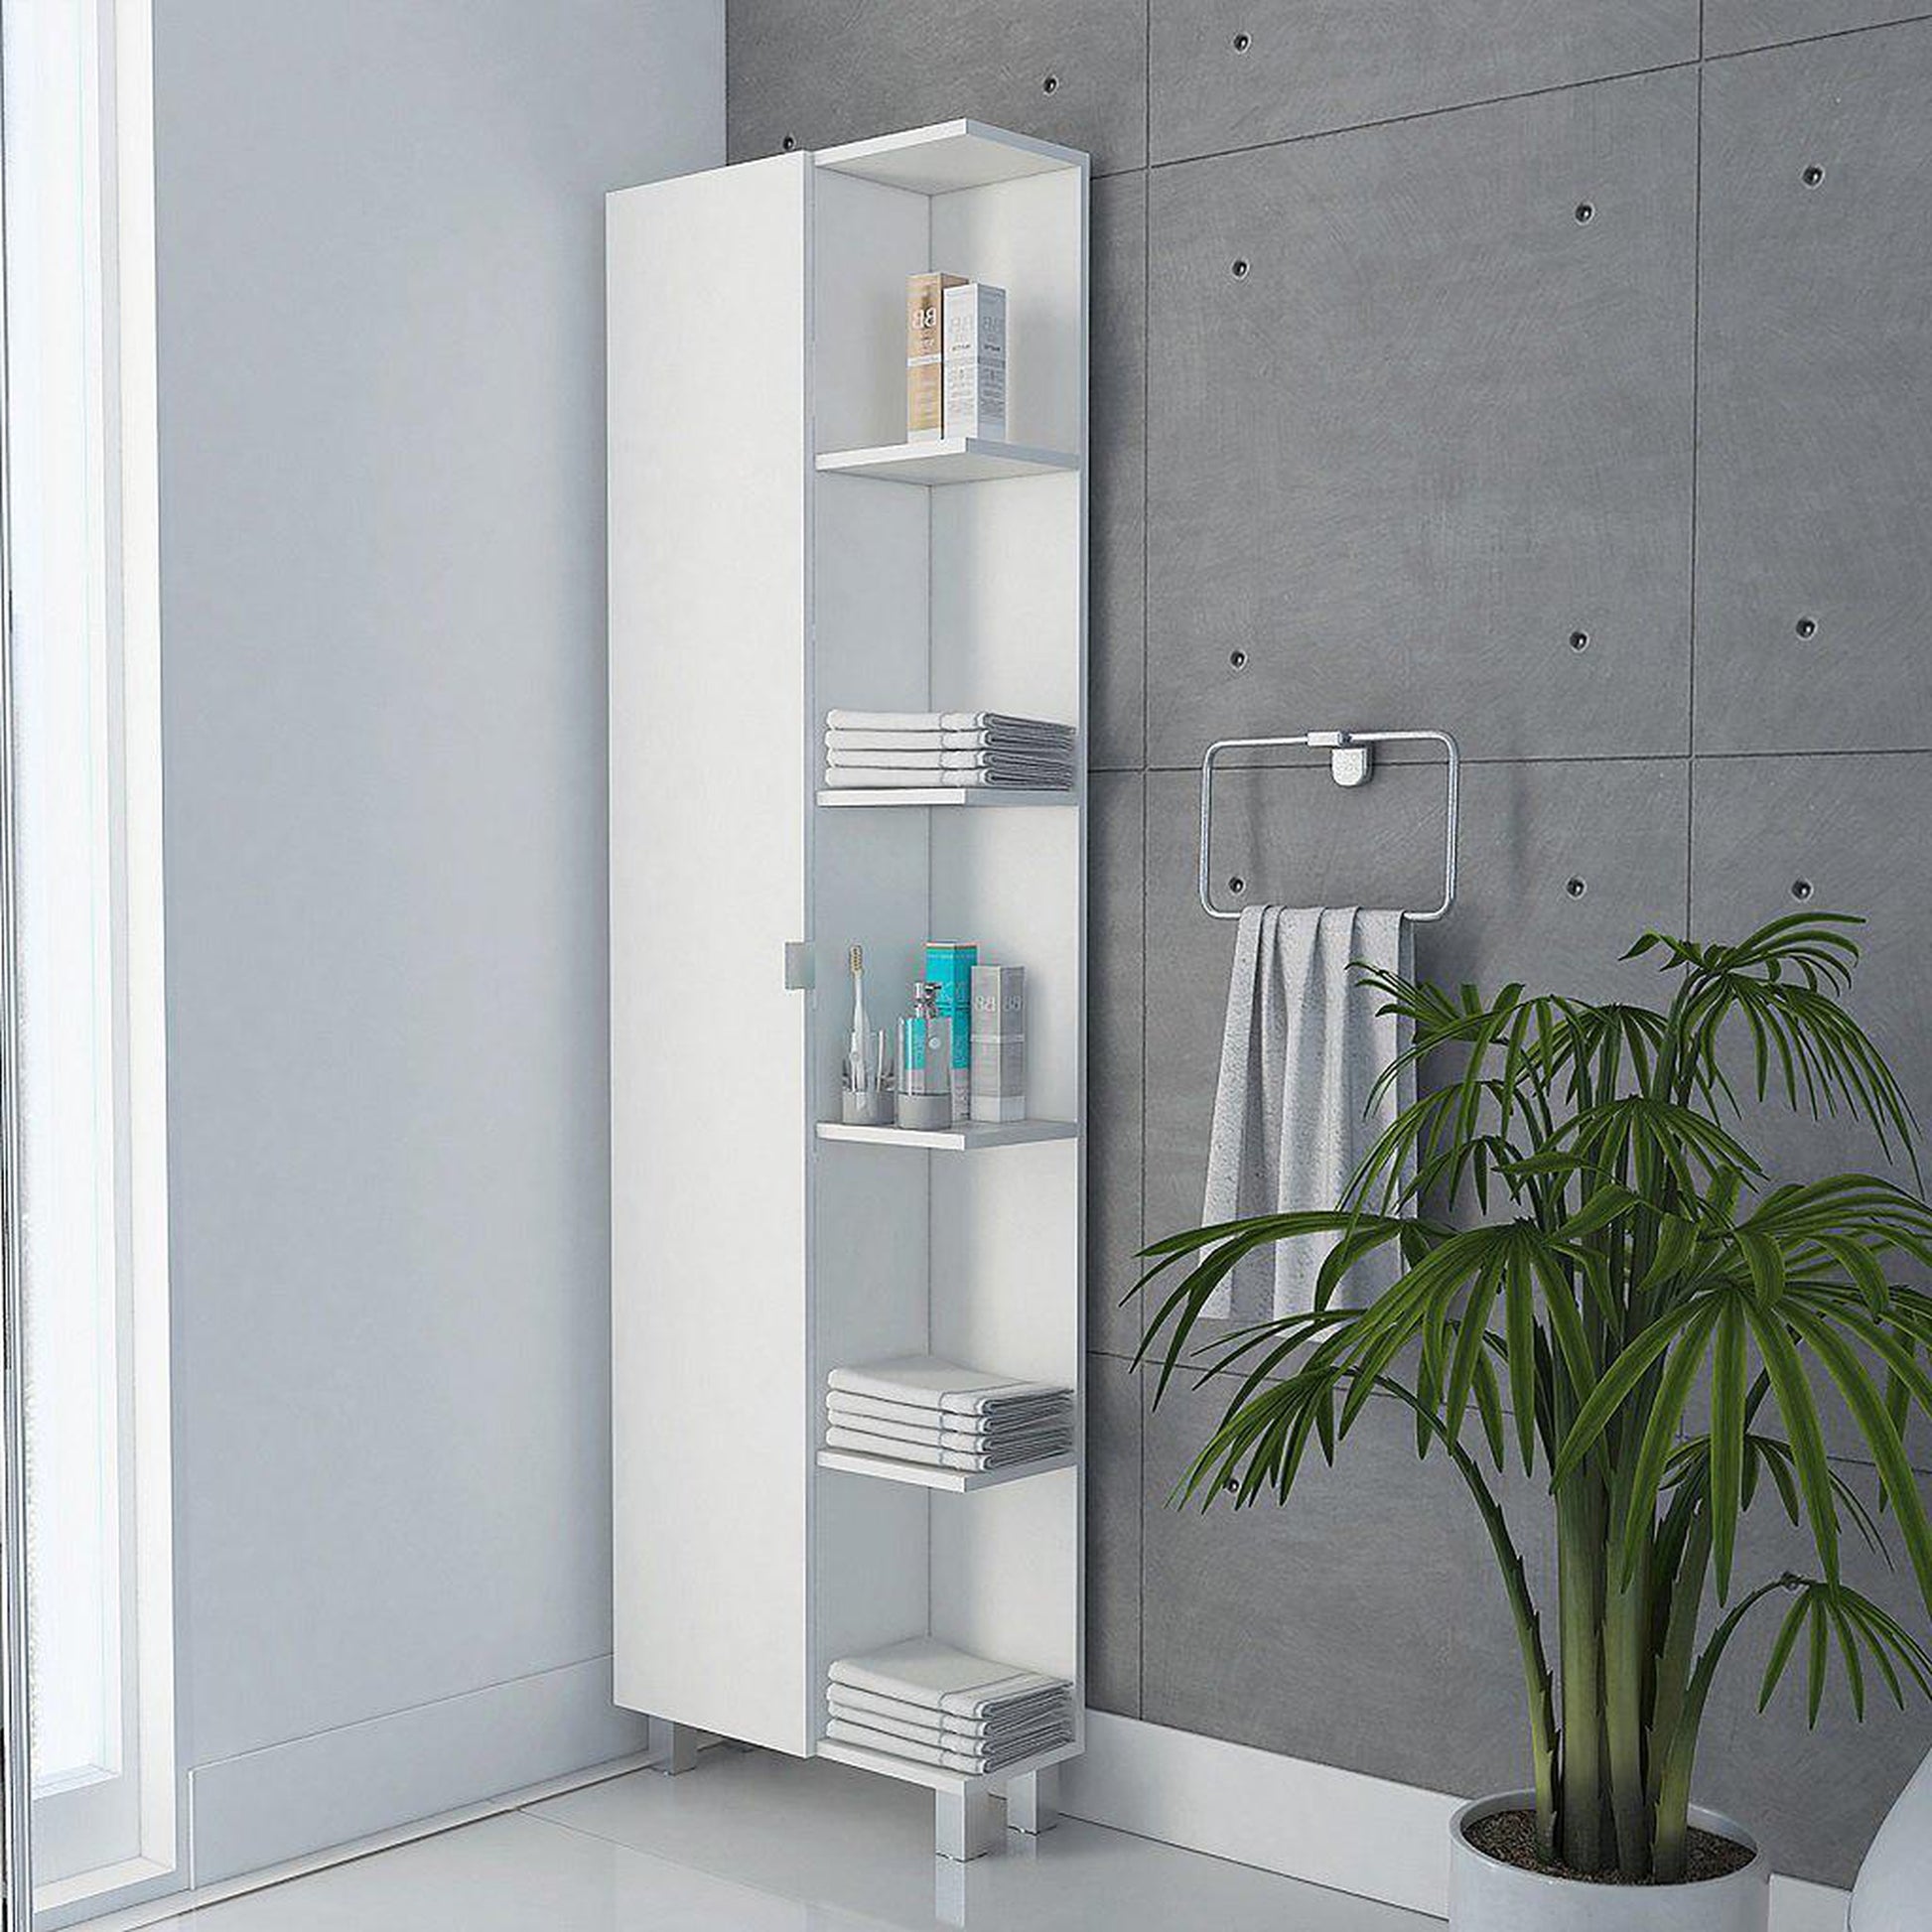 Modern Bathroom Linen Cabinets